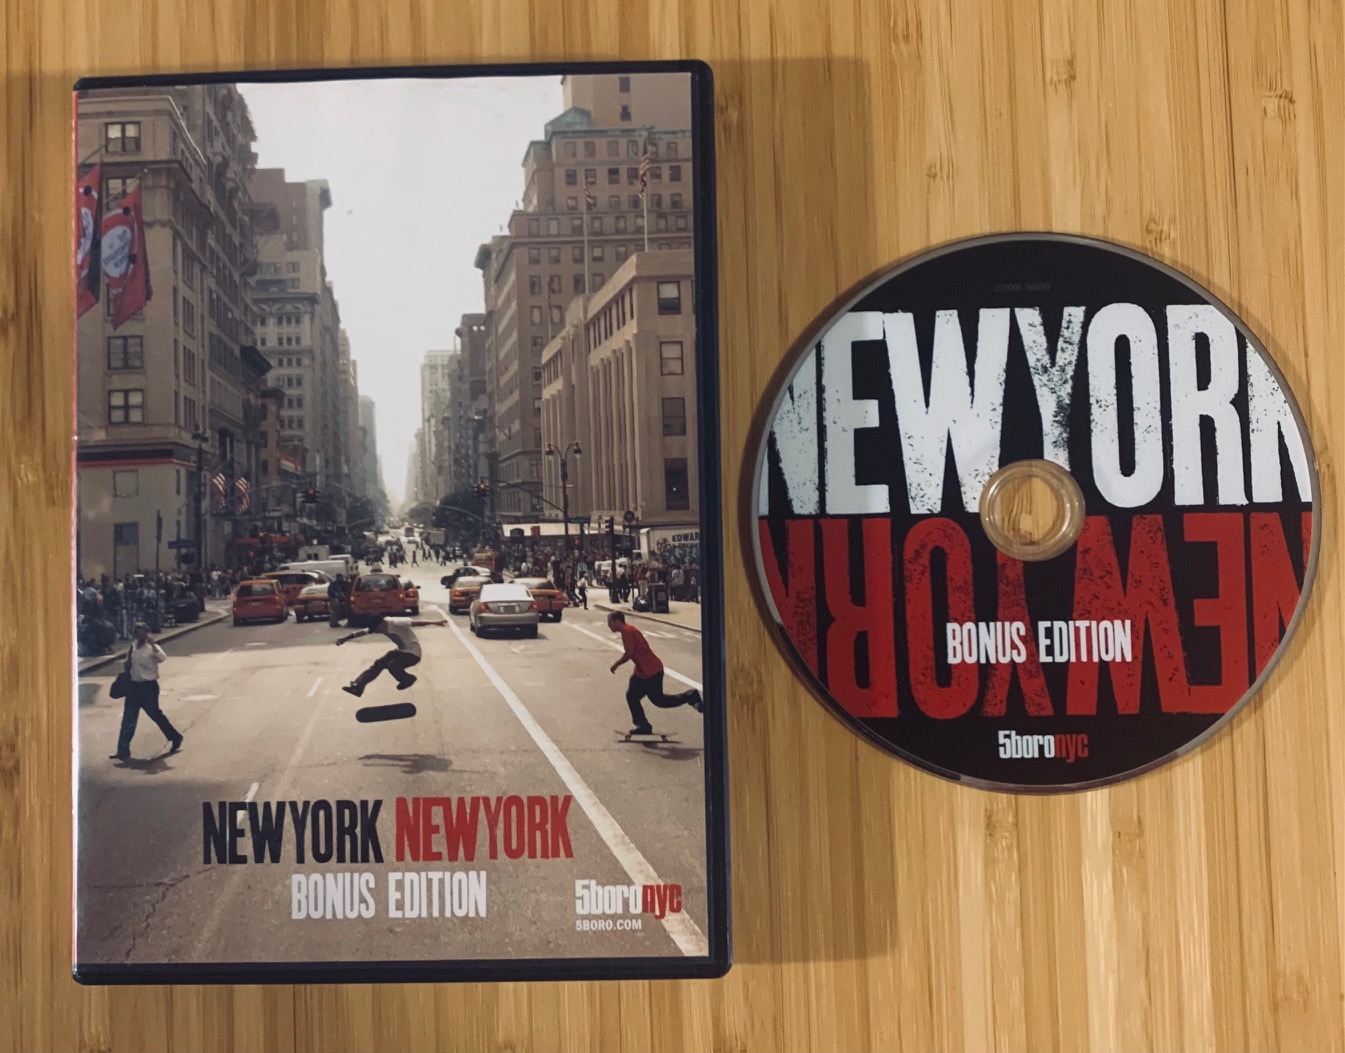 5boro - New York New York cover